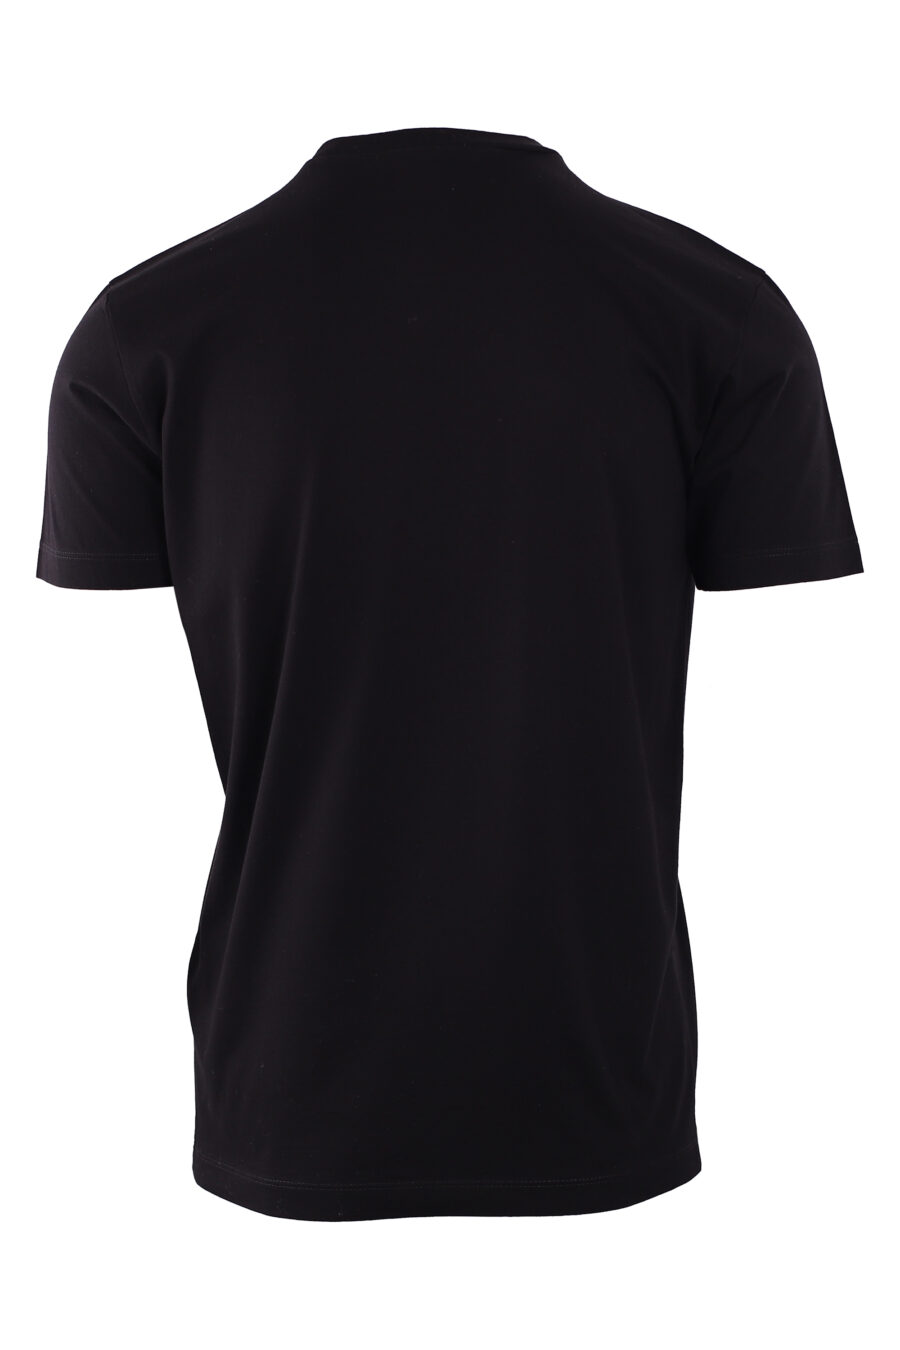 Camiseta negra con logo "D2" en cuadrado blanco - IMG 2900